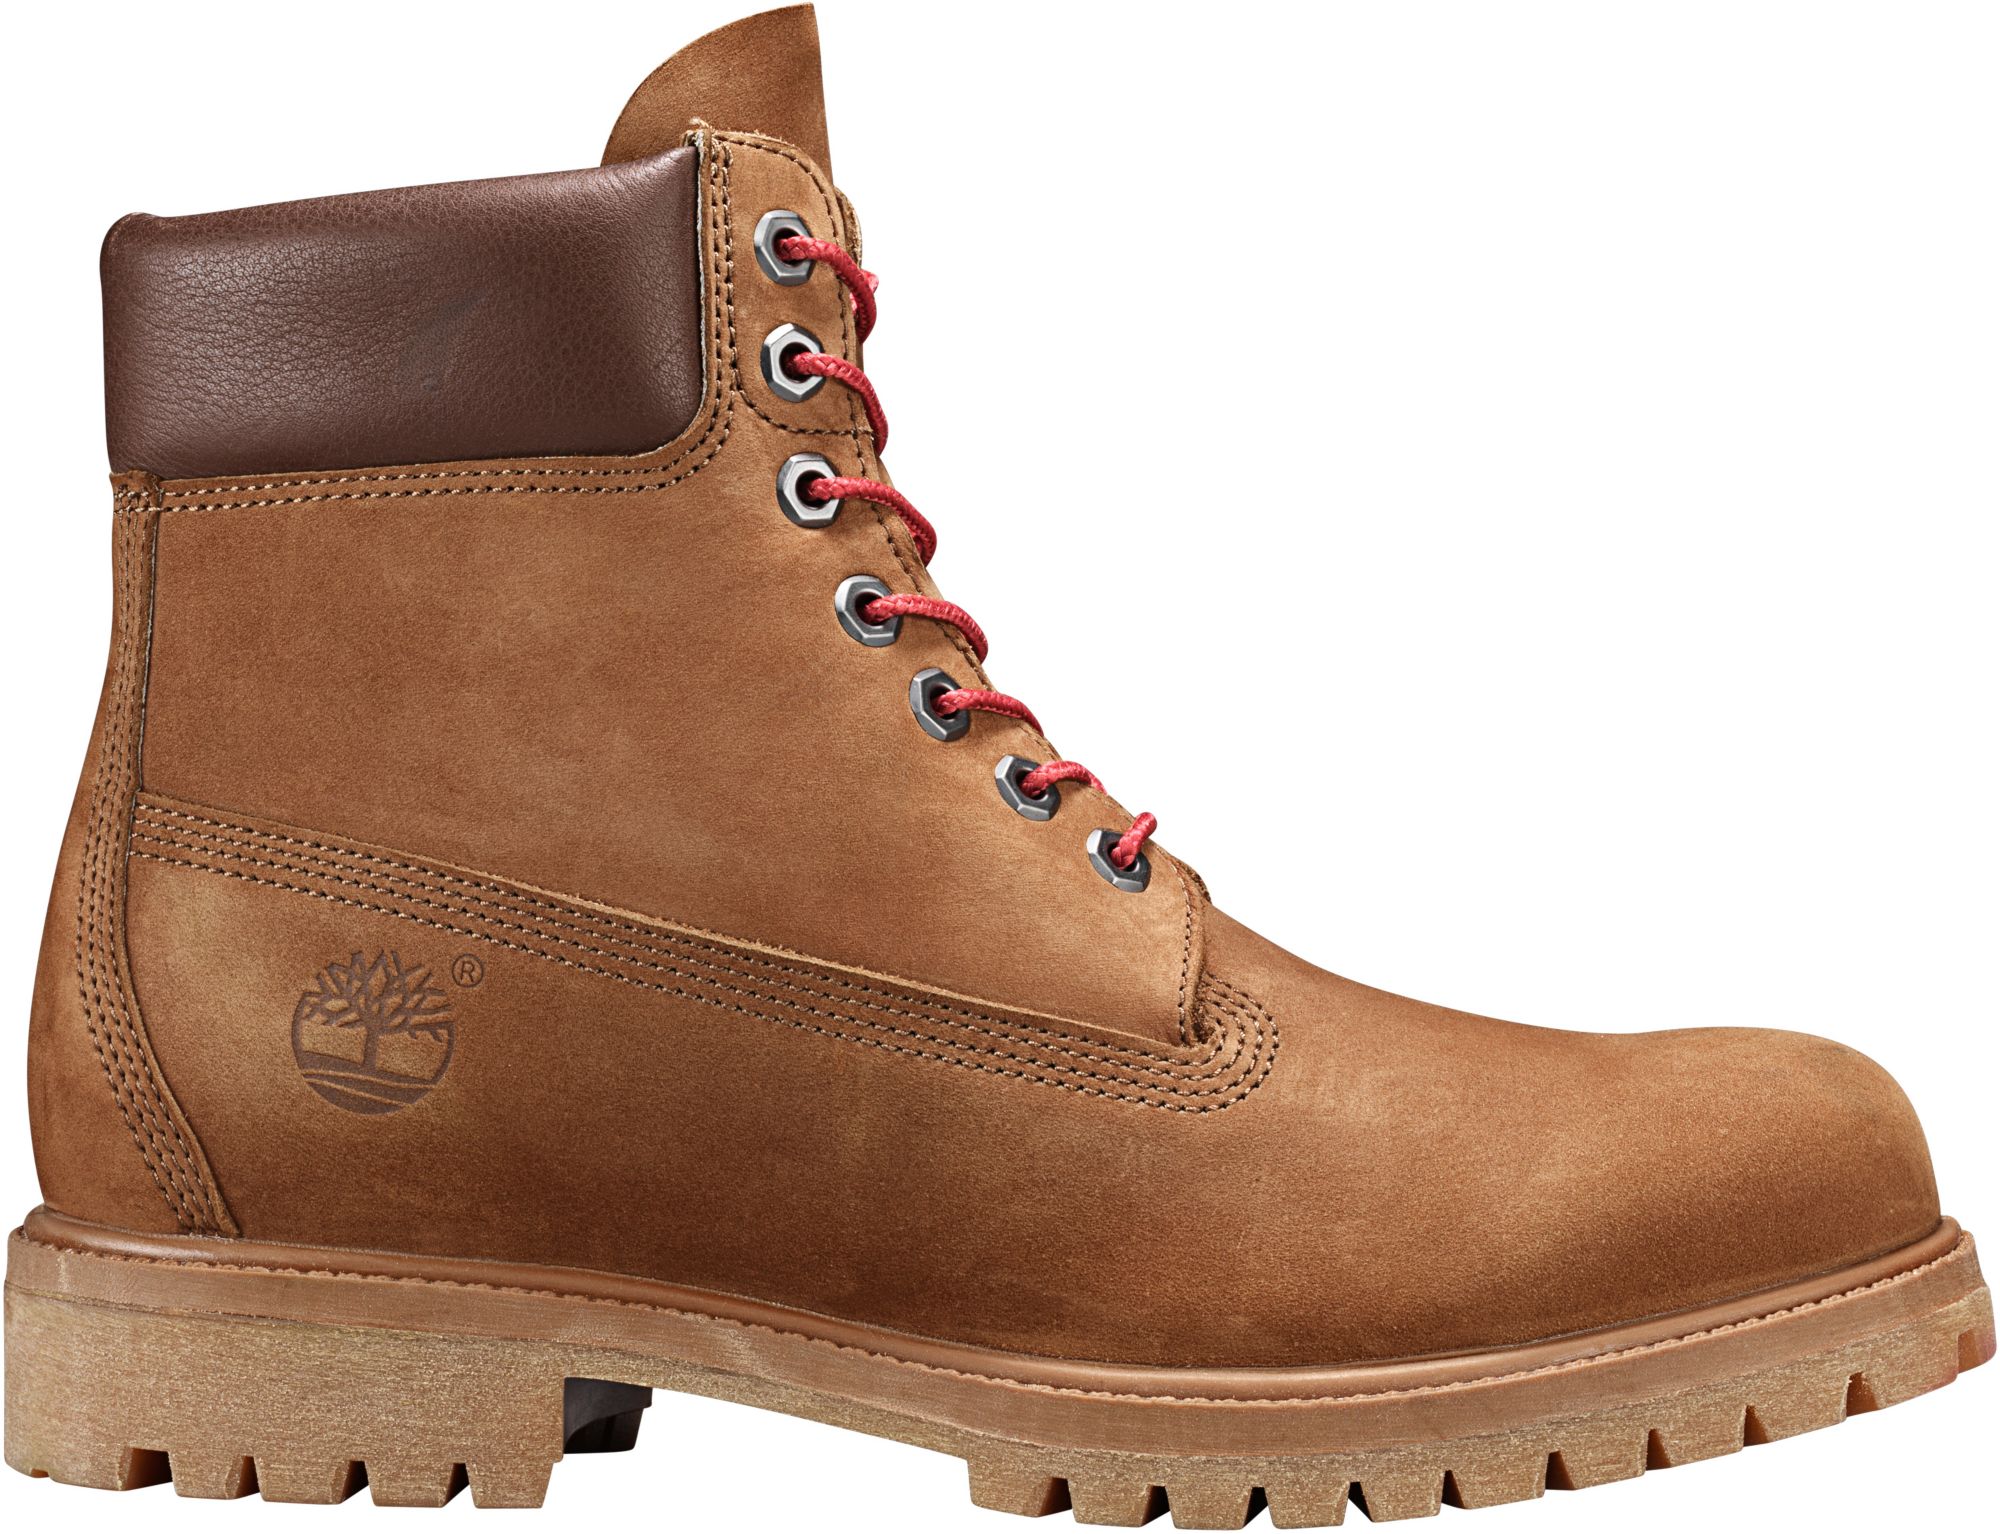 Timberland Boots | Best Price Guarantee 